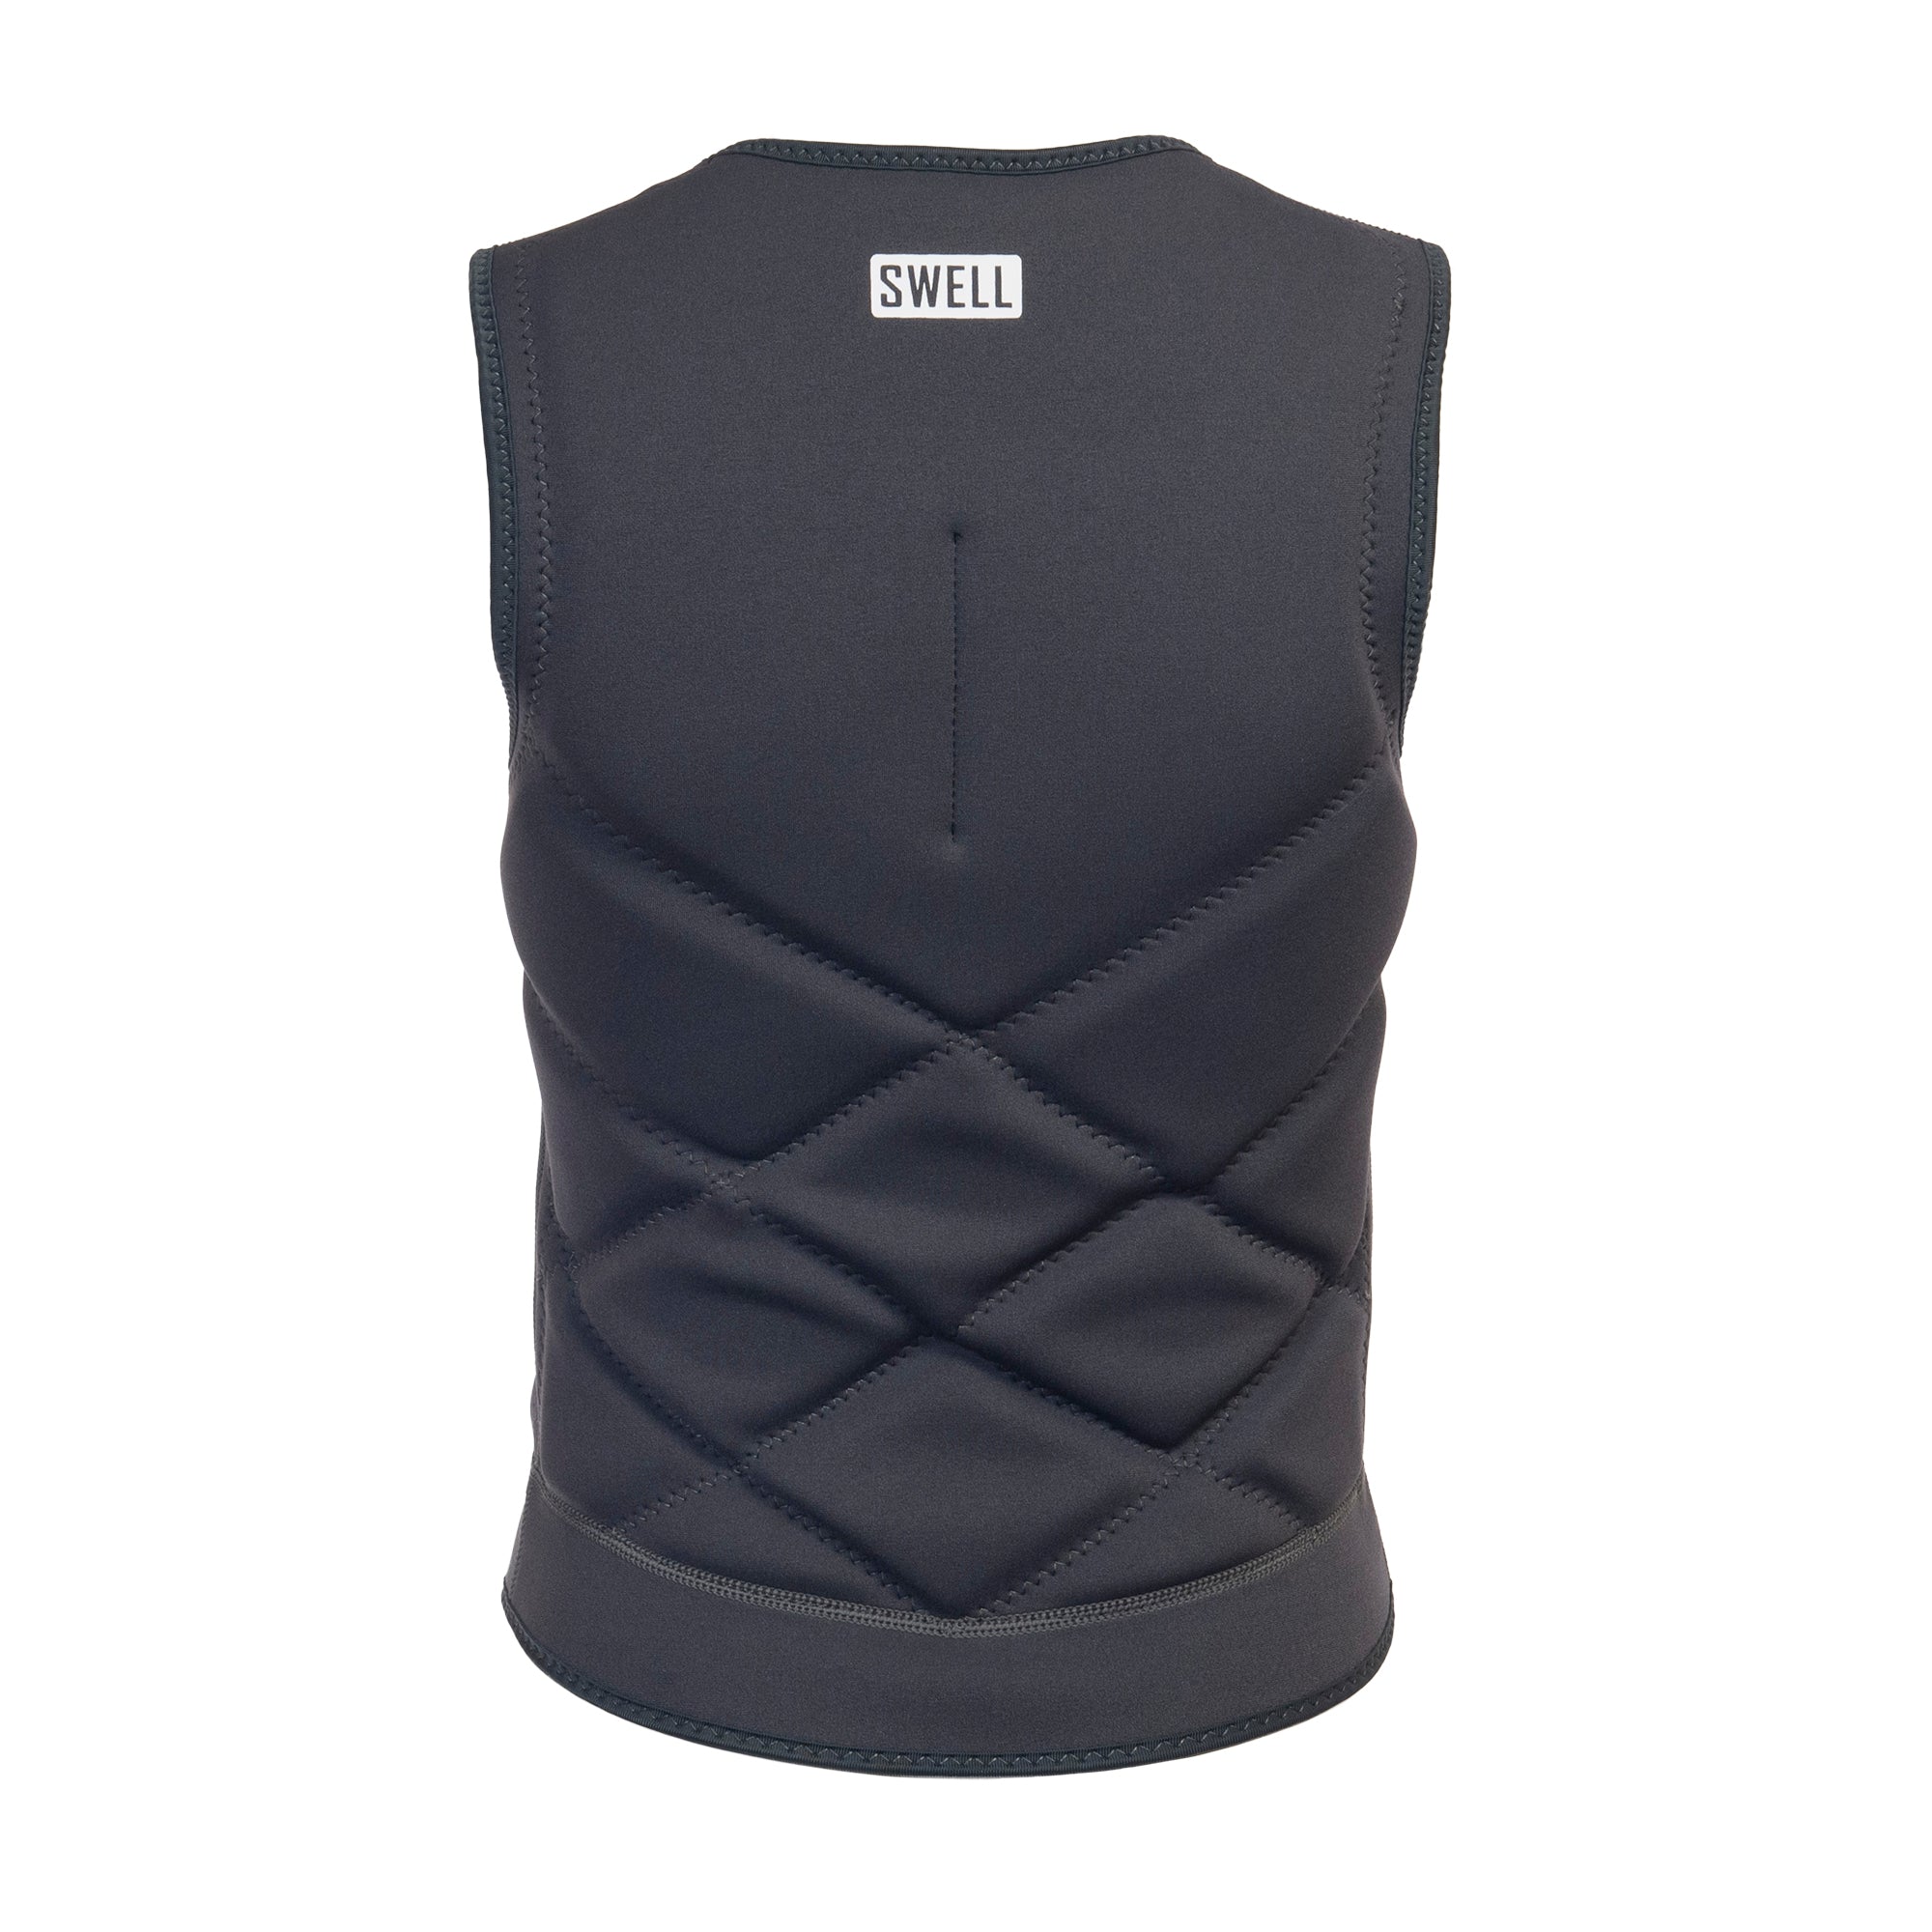 SWELL Comp Vest - Women's Charcoal - Neoprene Jacket